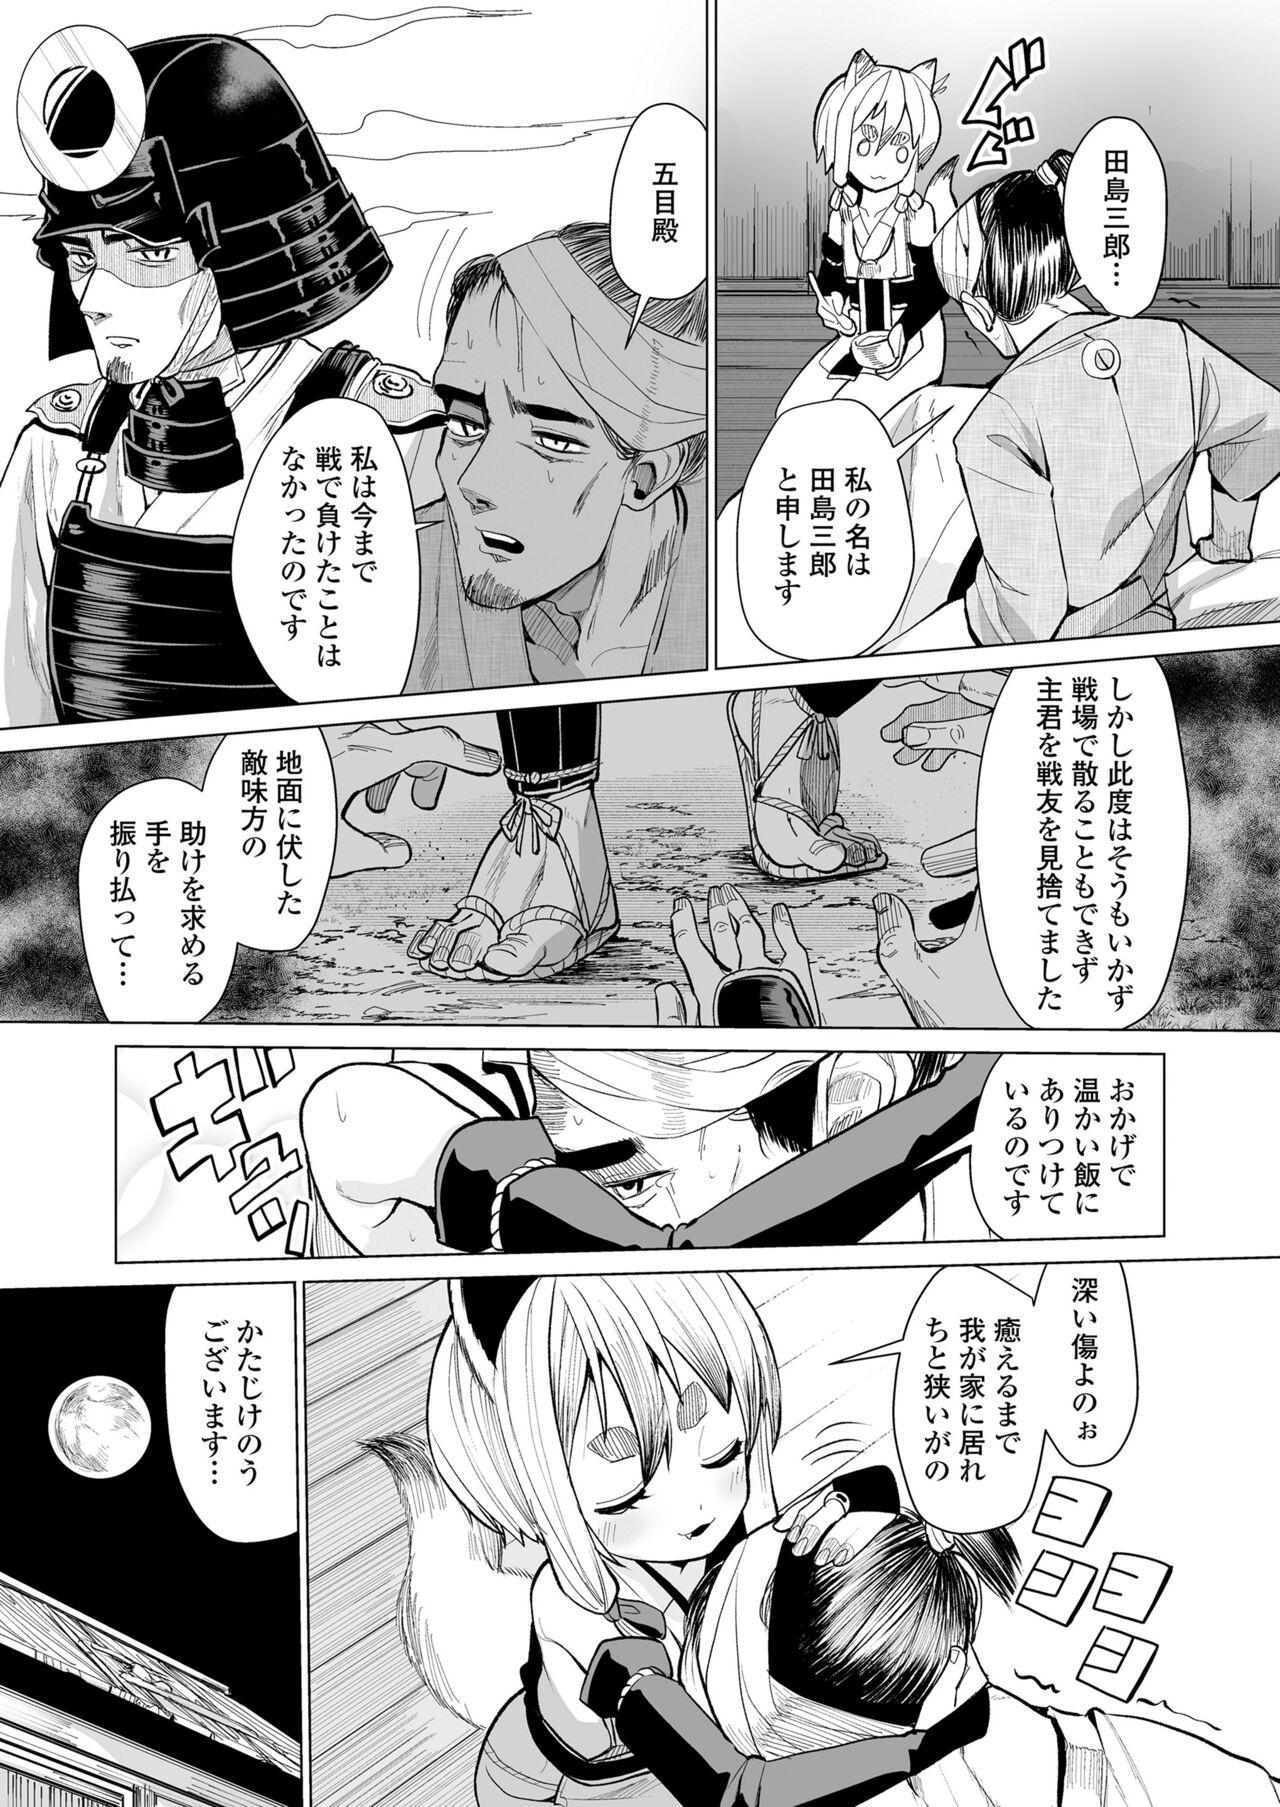 Spoon Towako Oboro Emaki 11 Tesao - Page 11